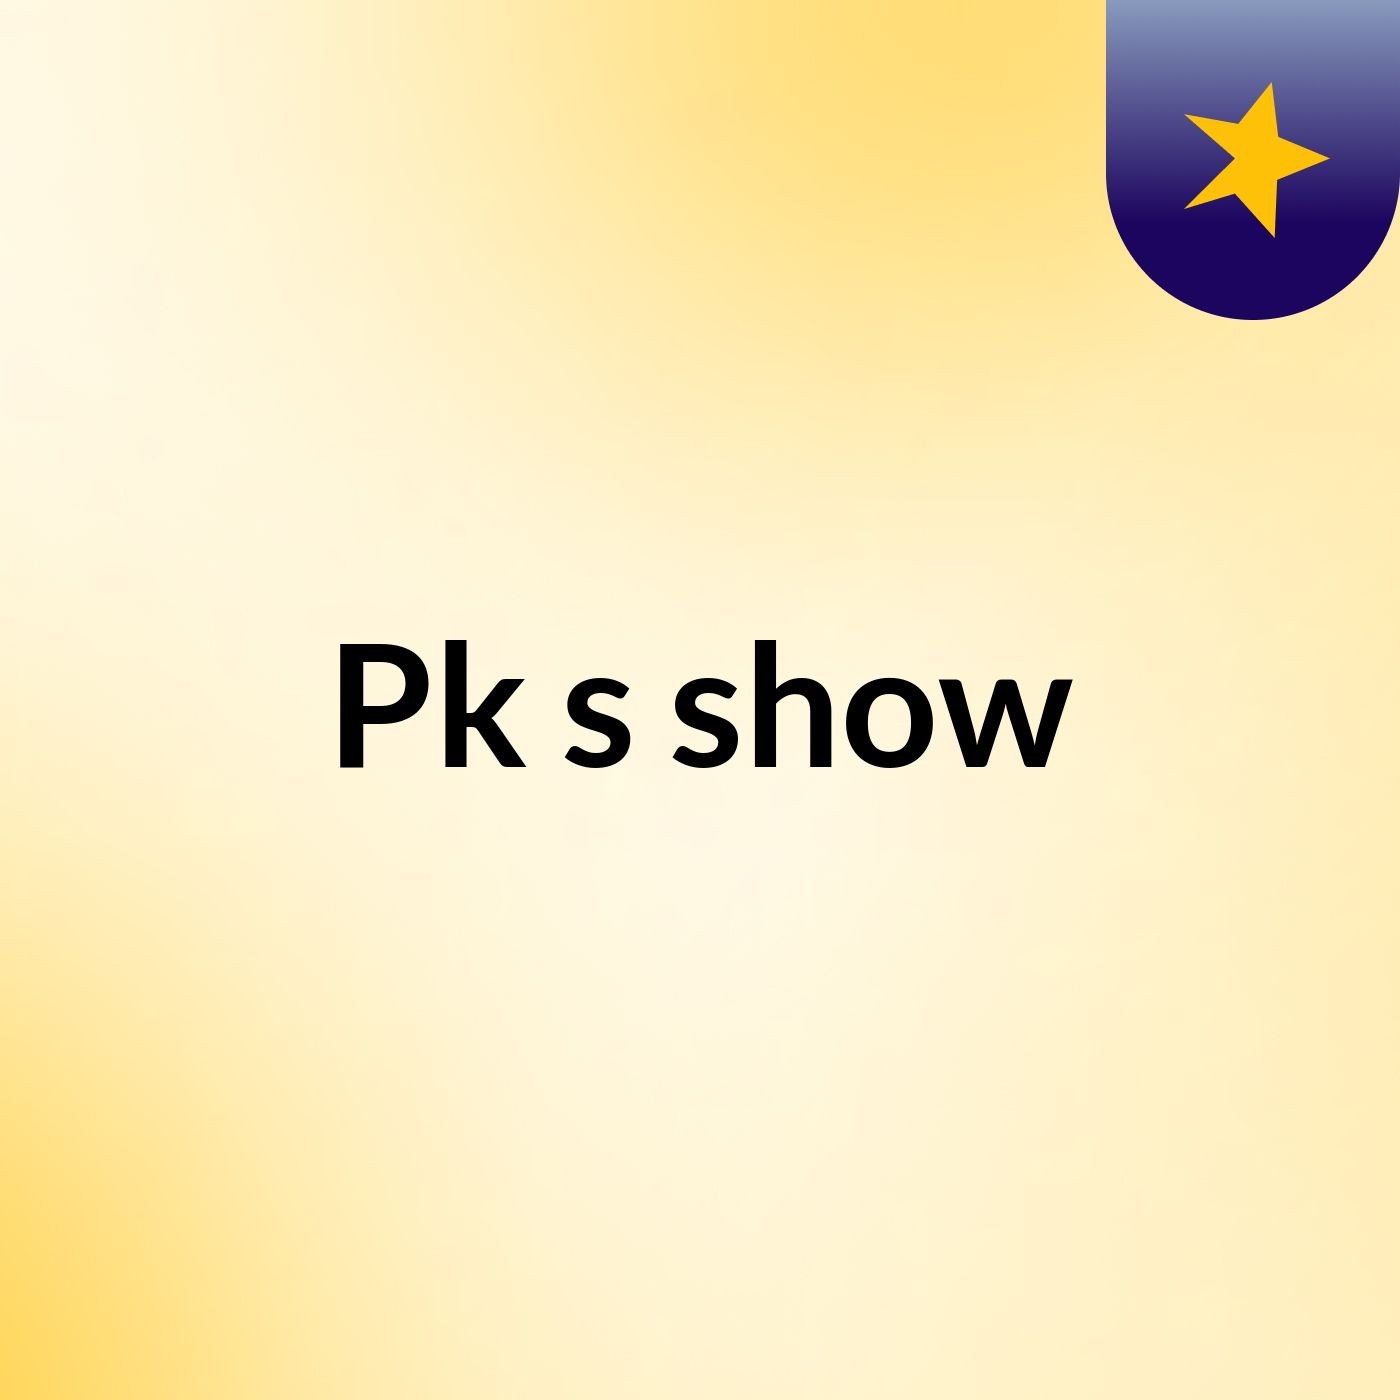 Pk's show